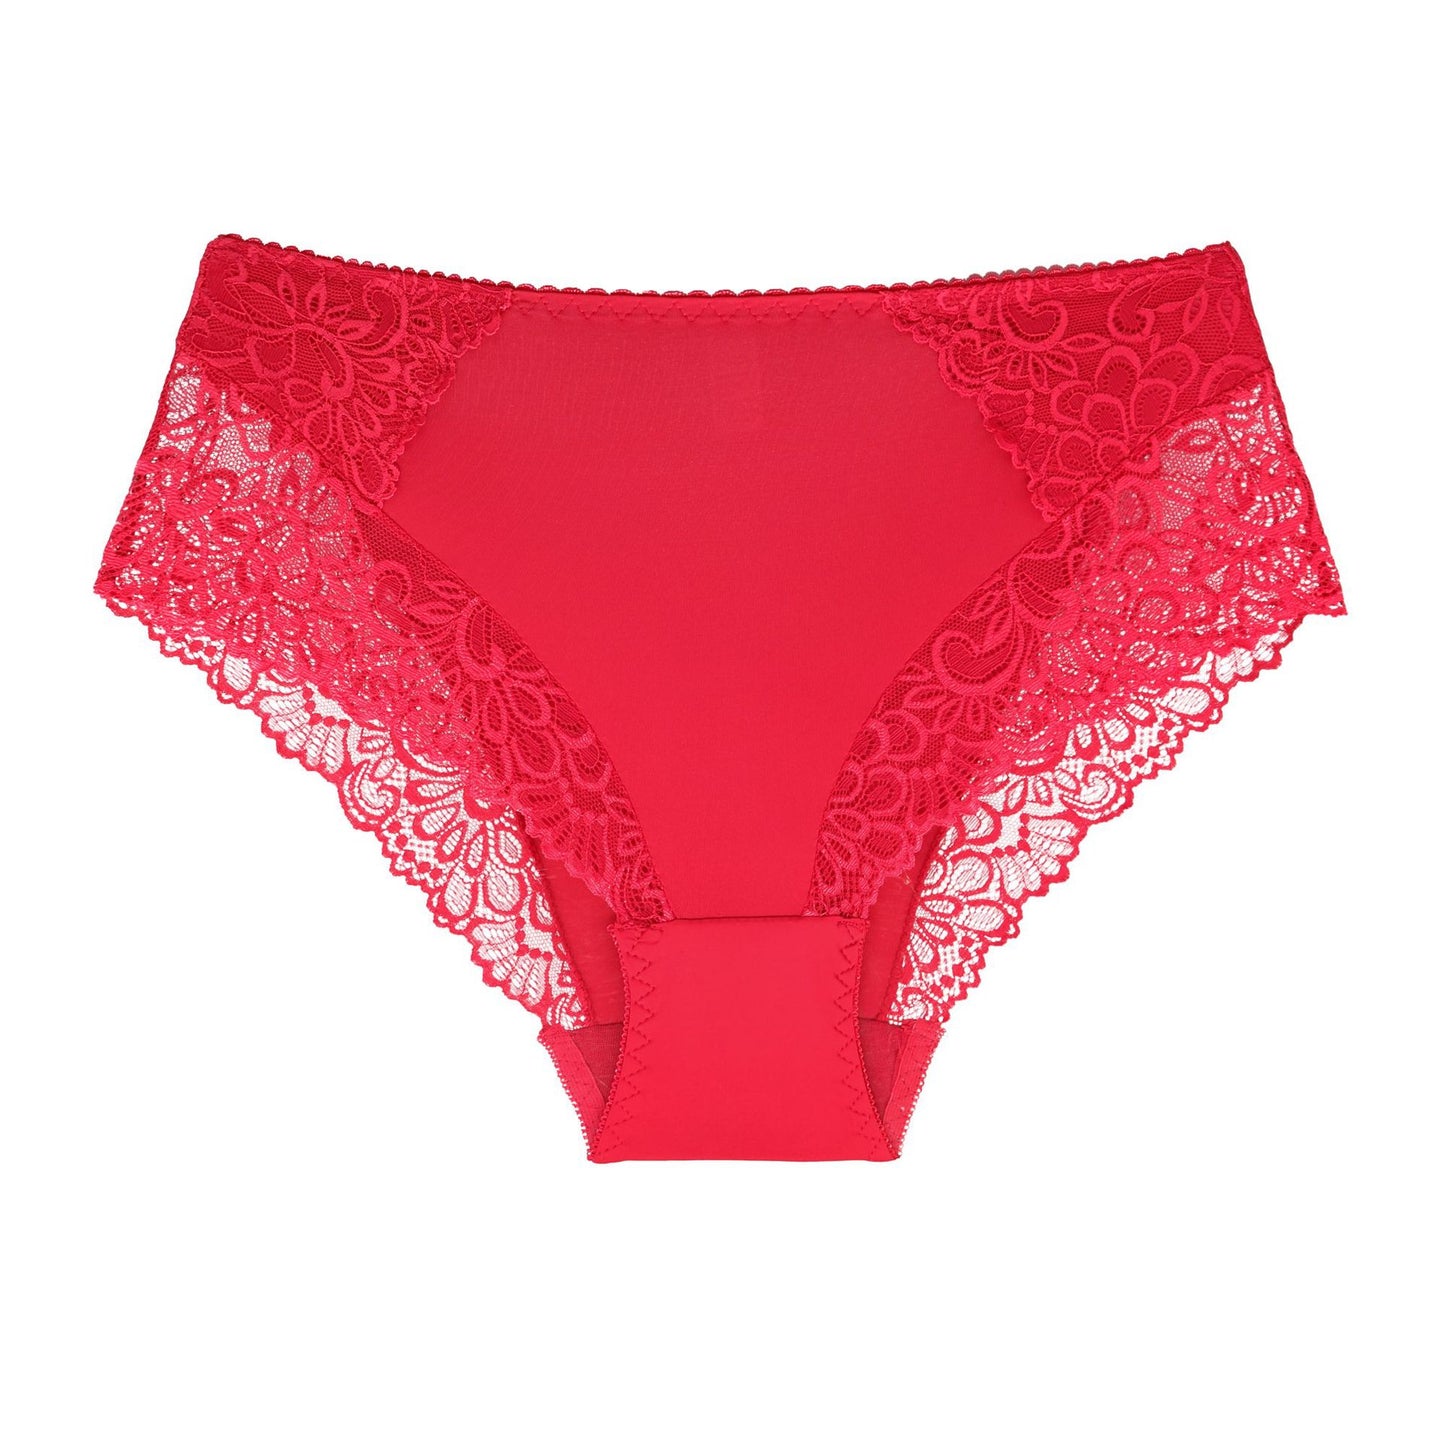 Lace Plus Size Women's Triangle High Waist Underwear